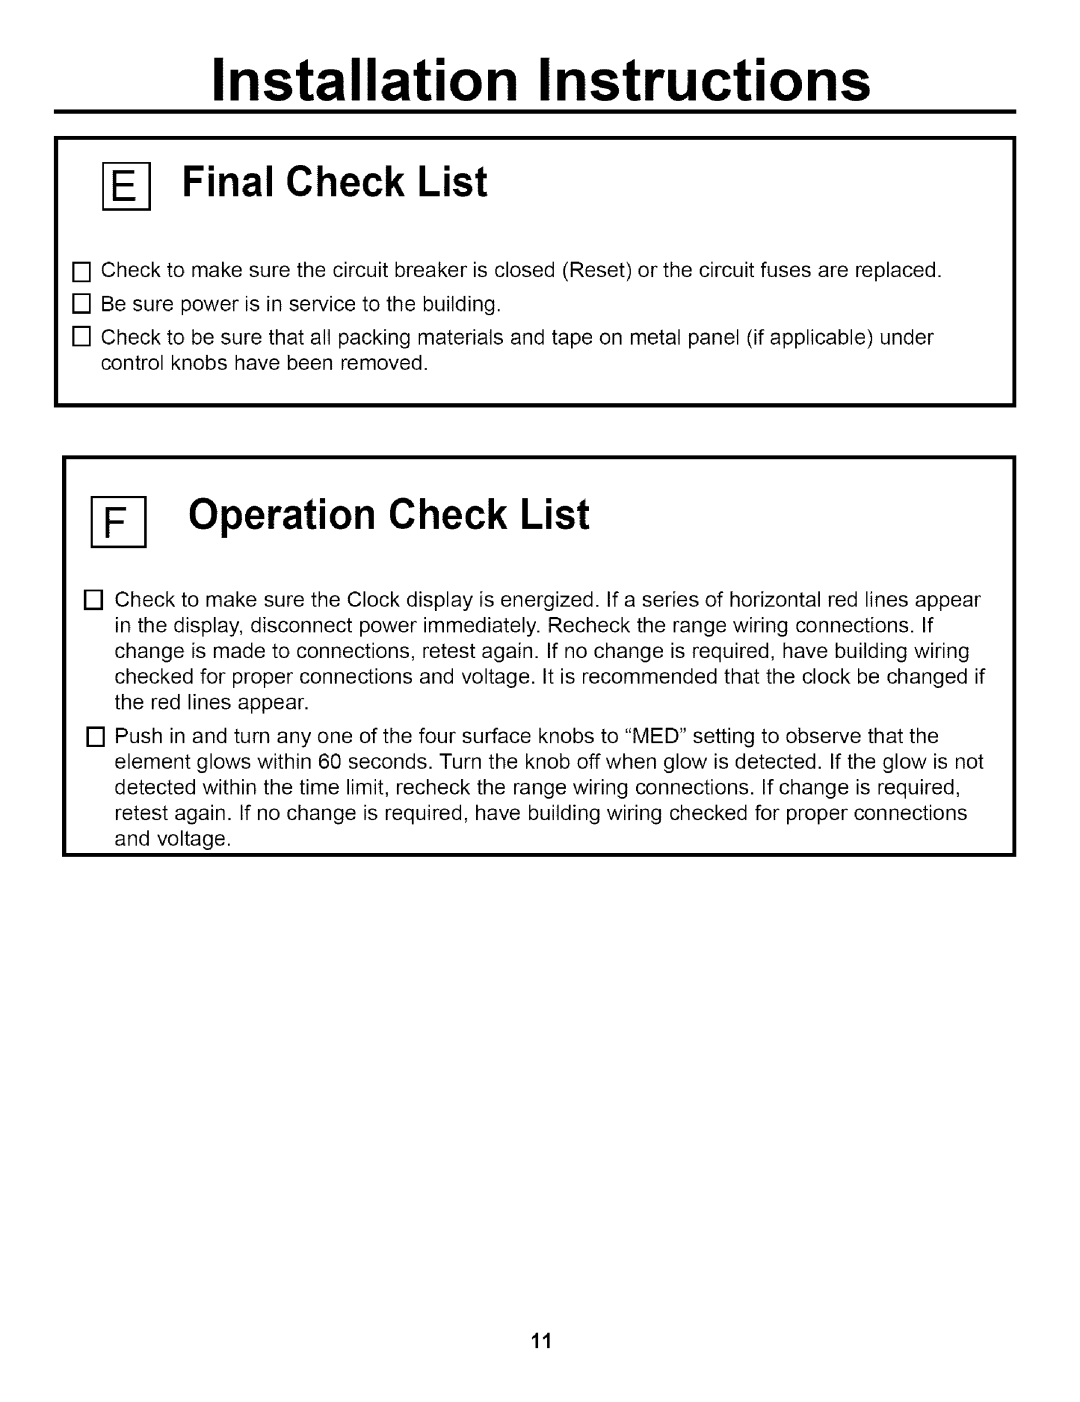 GE JBP79 installation instructions Final Check List, Operation Check List, Installation Instructions 